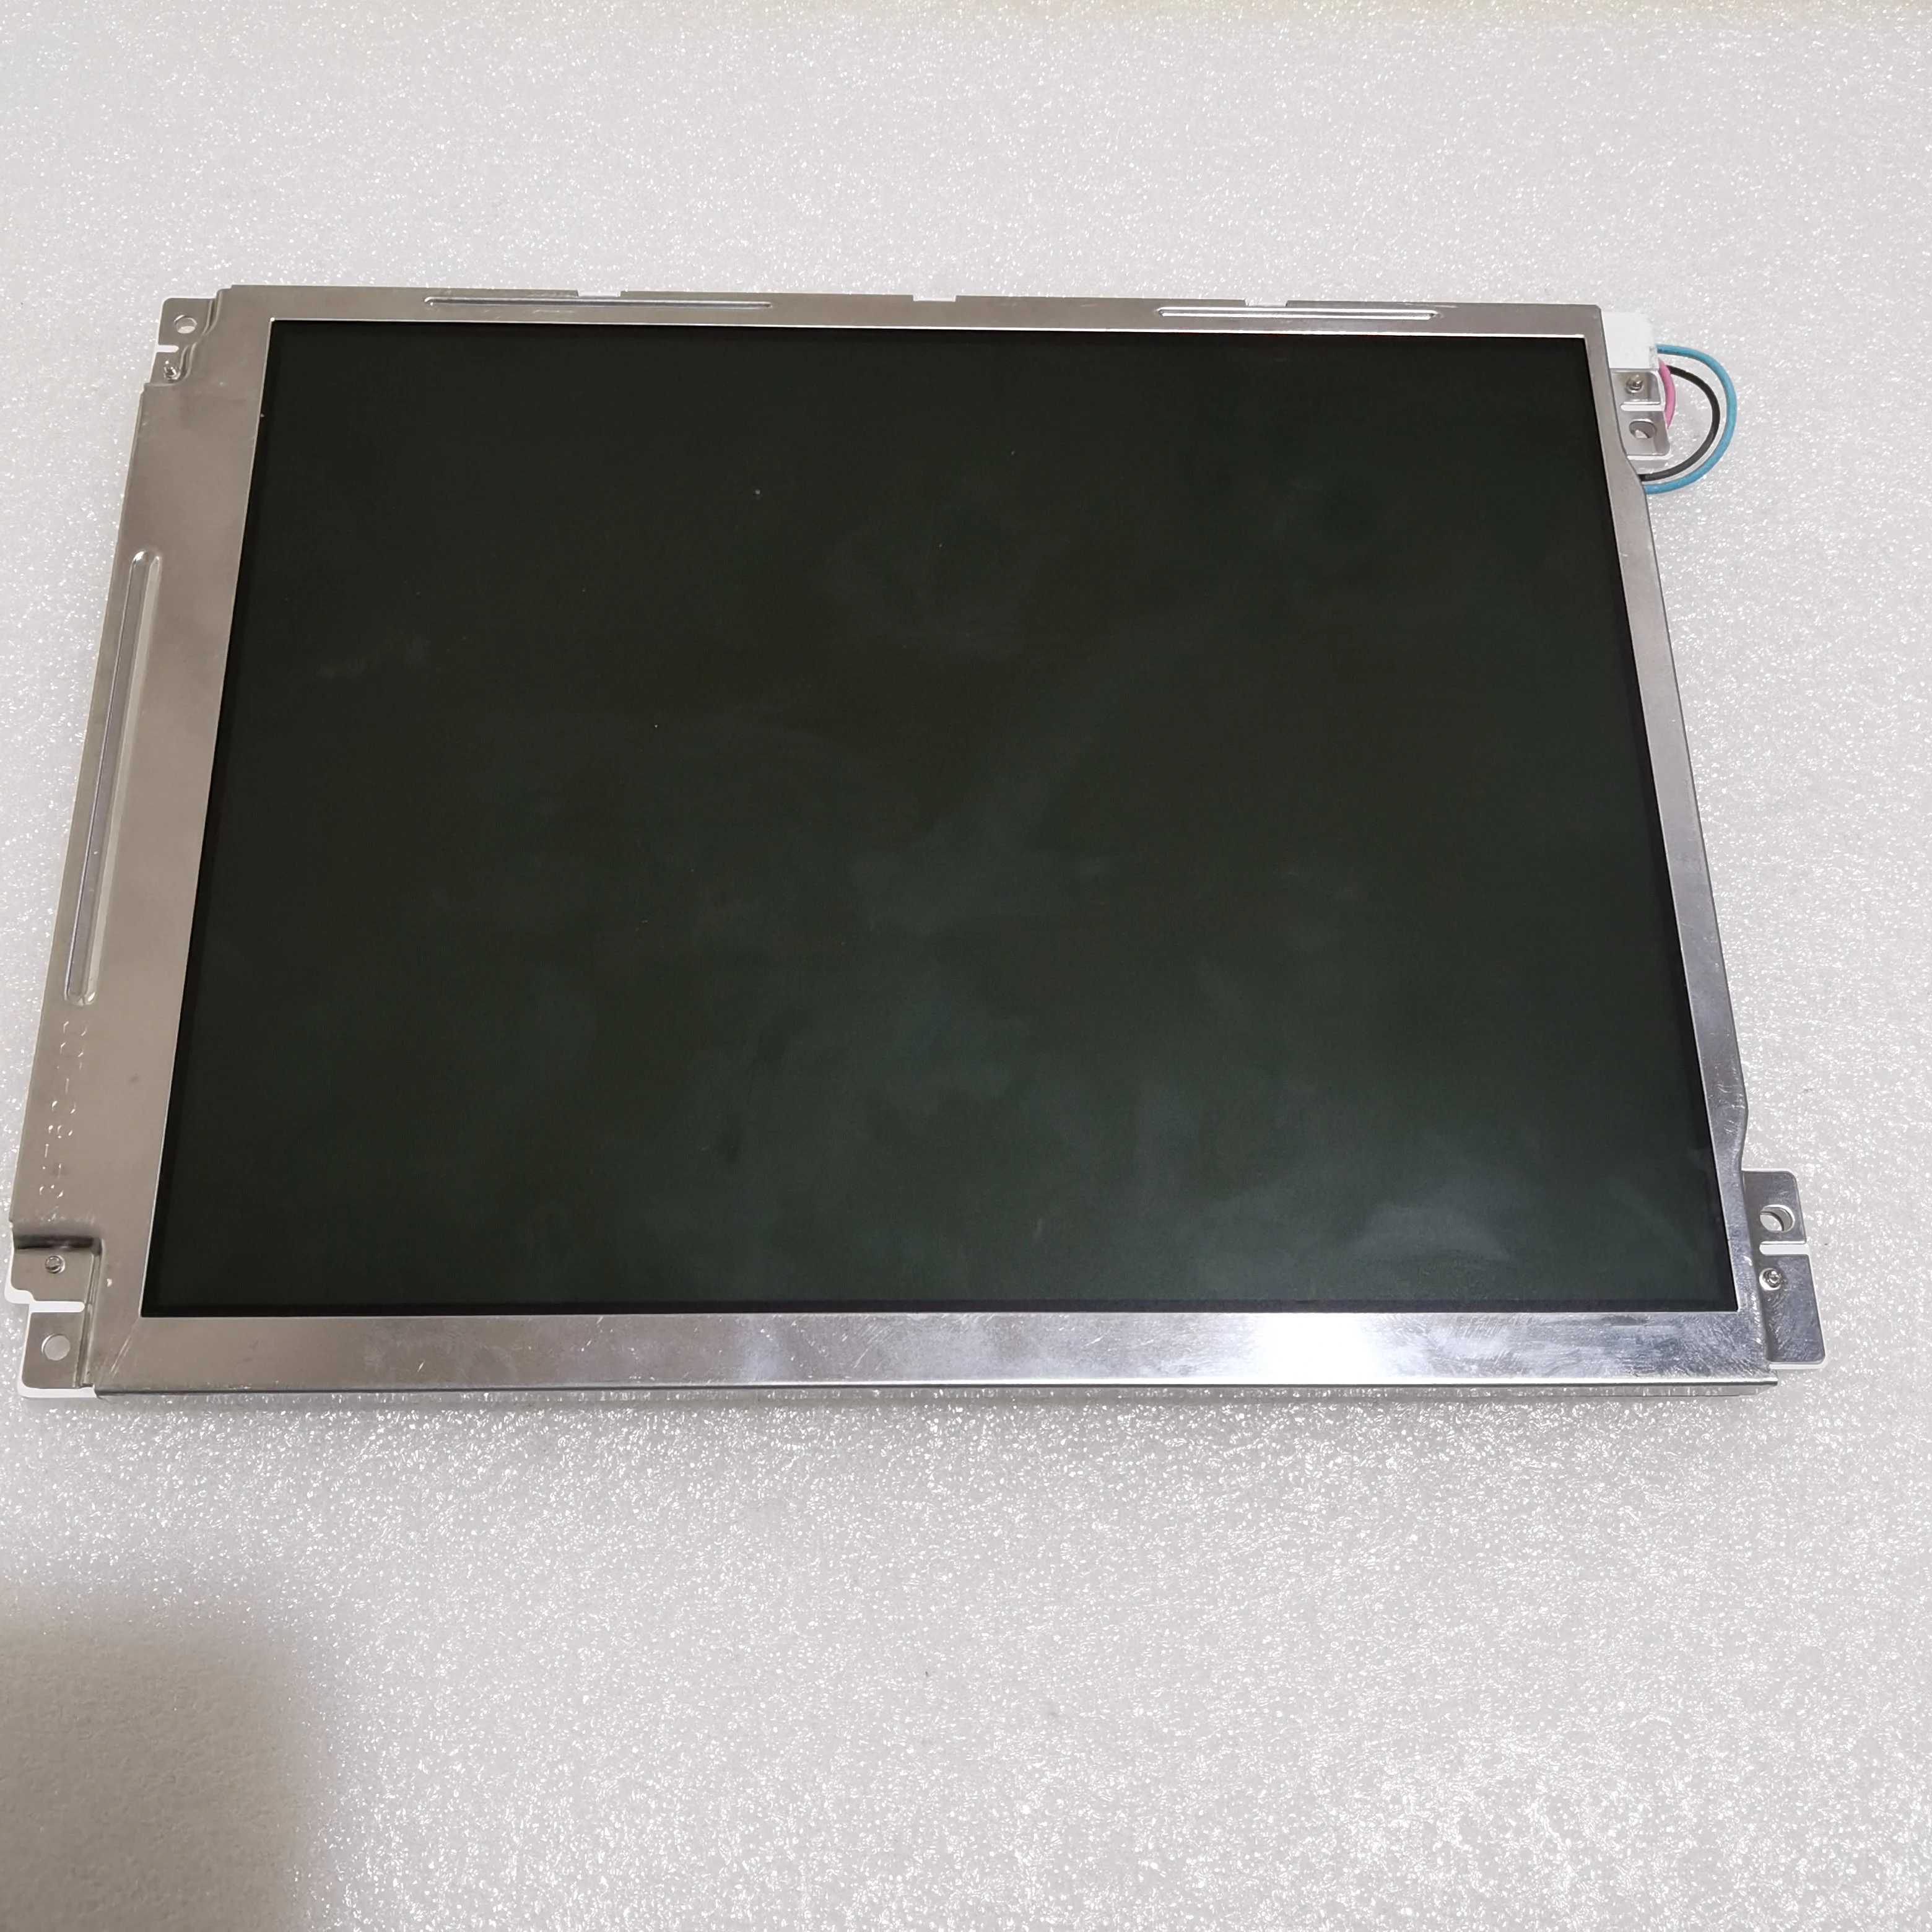 100% oryginalny testowany ekran LCD LQ104V1DG61 10.4 cal